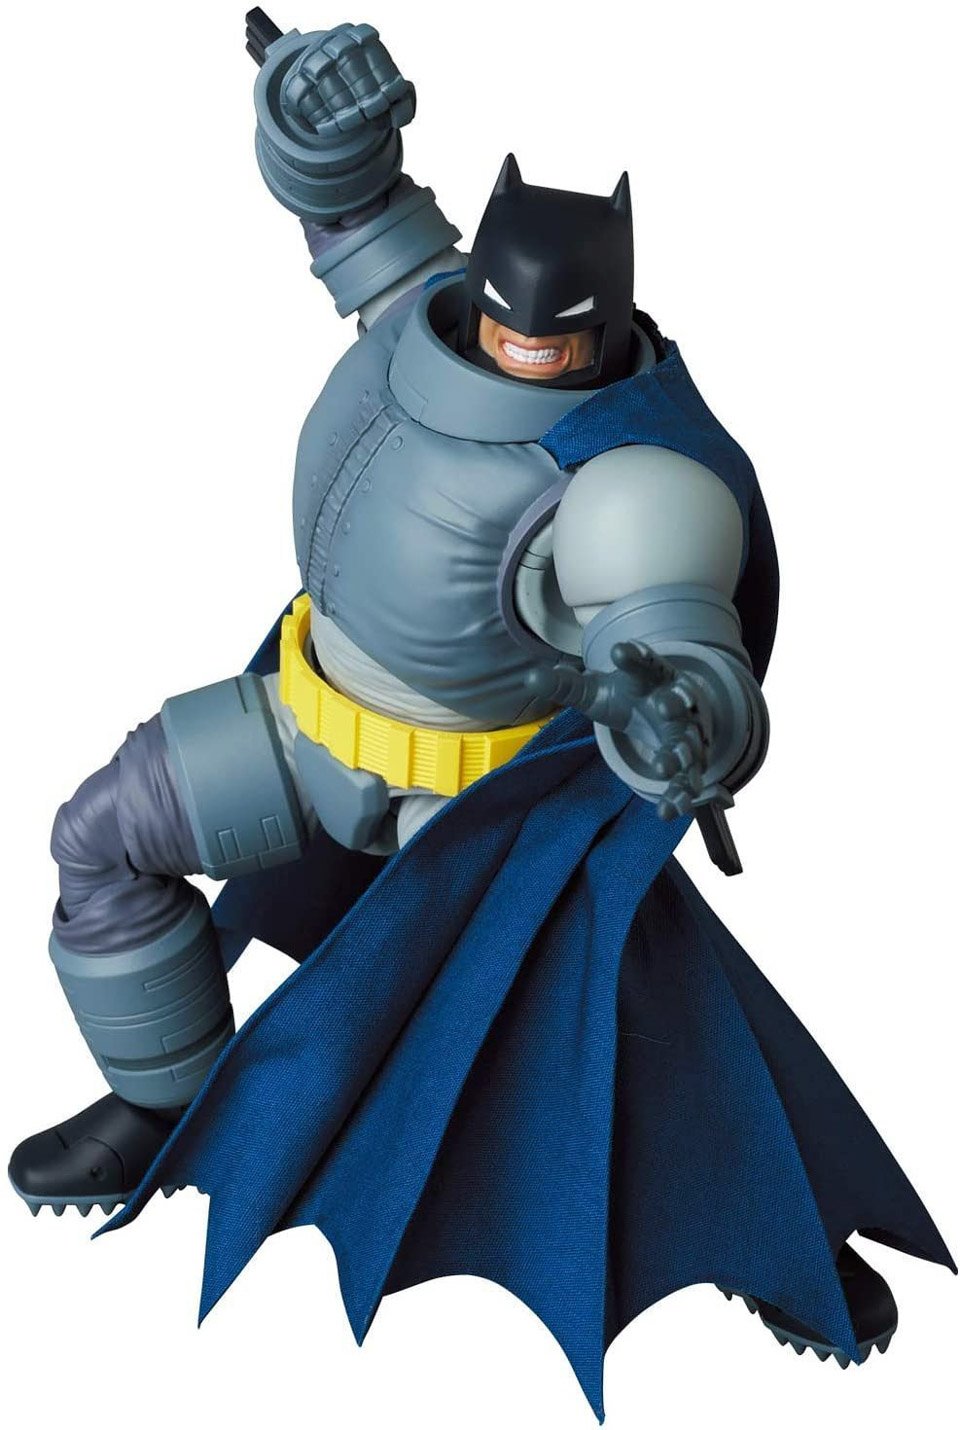 MAFEX Armored Batman Figure